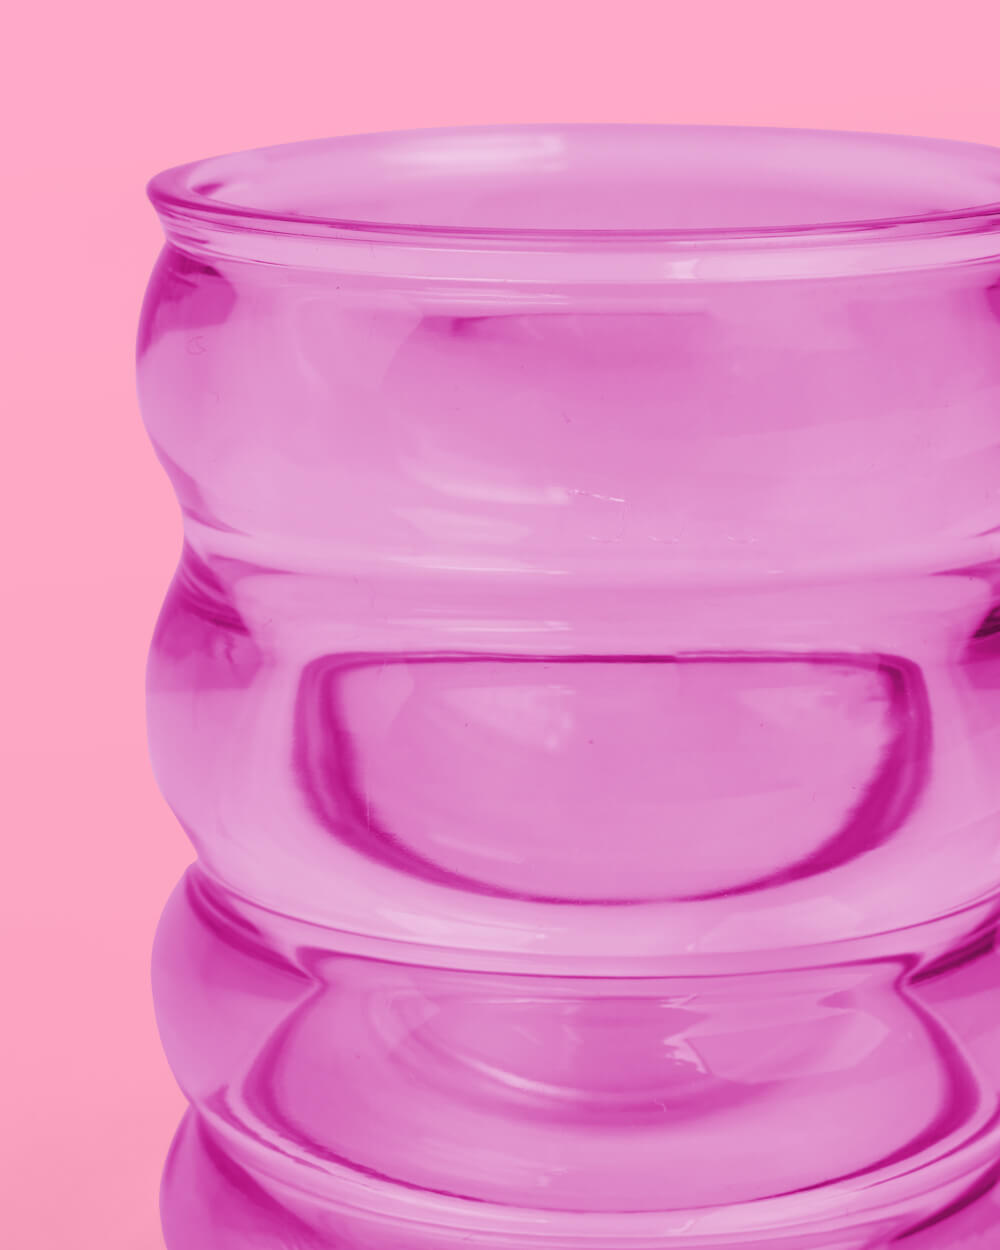 Wavy Cups - 4 reusable acrylic cups